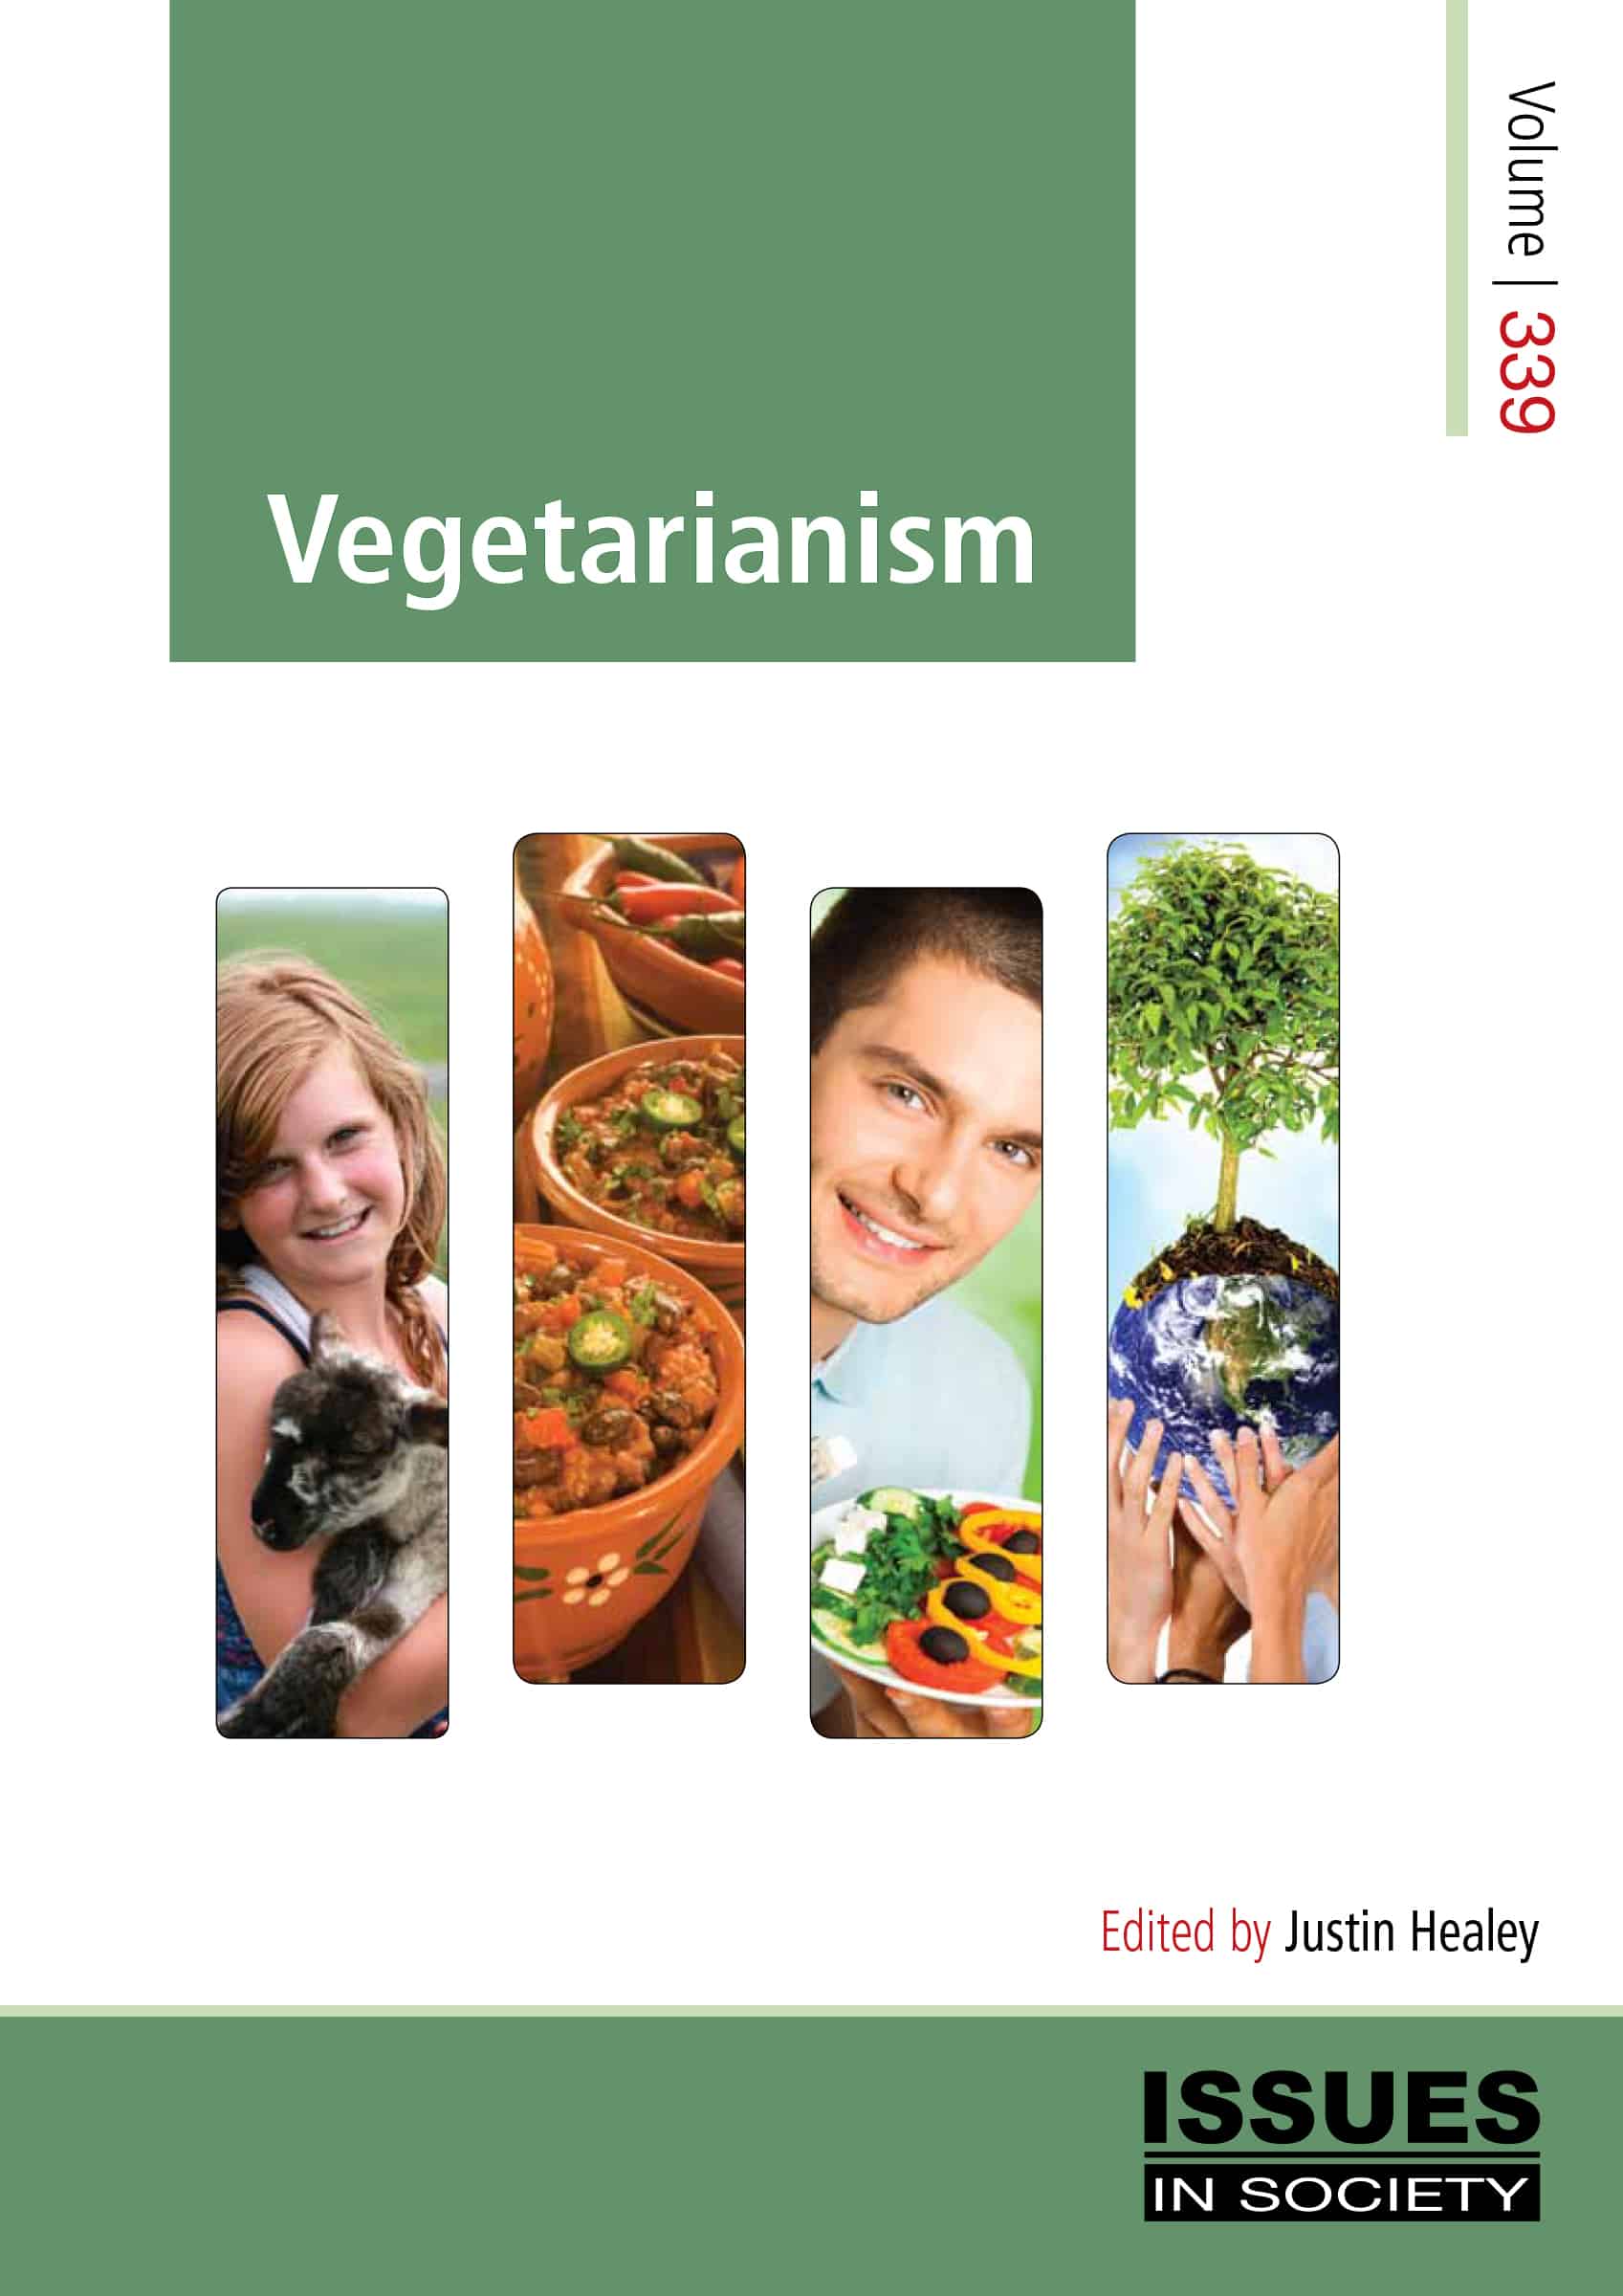 essay title vegetarianism